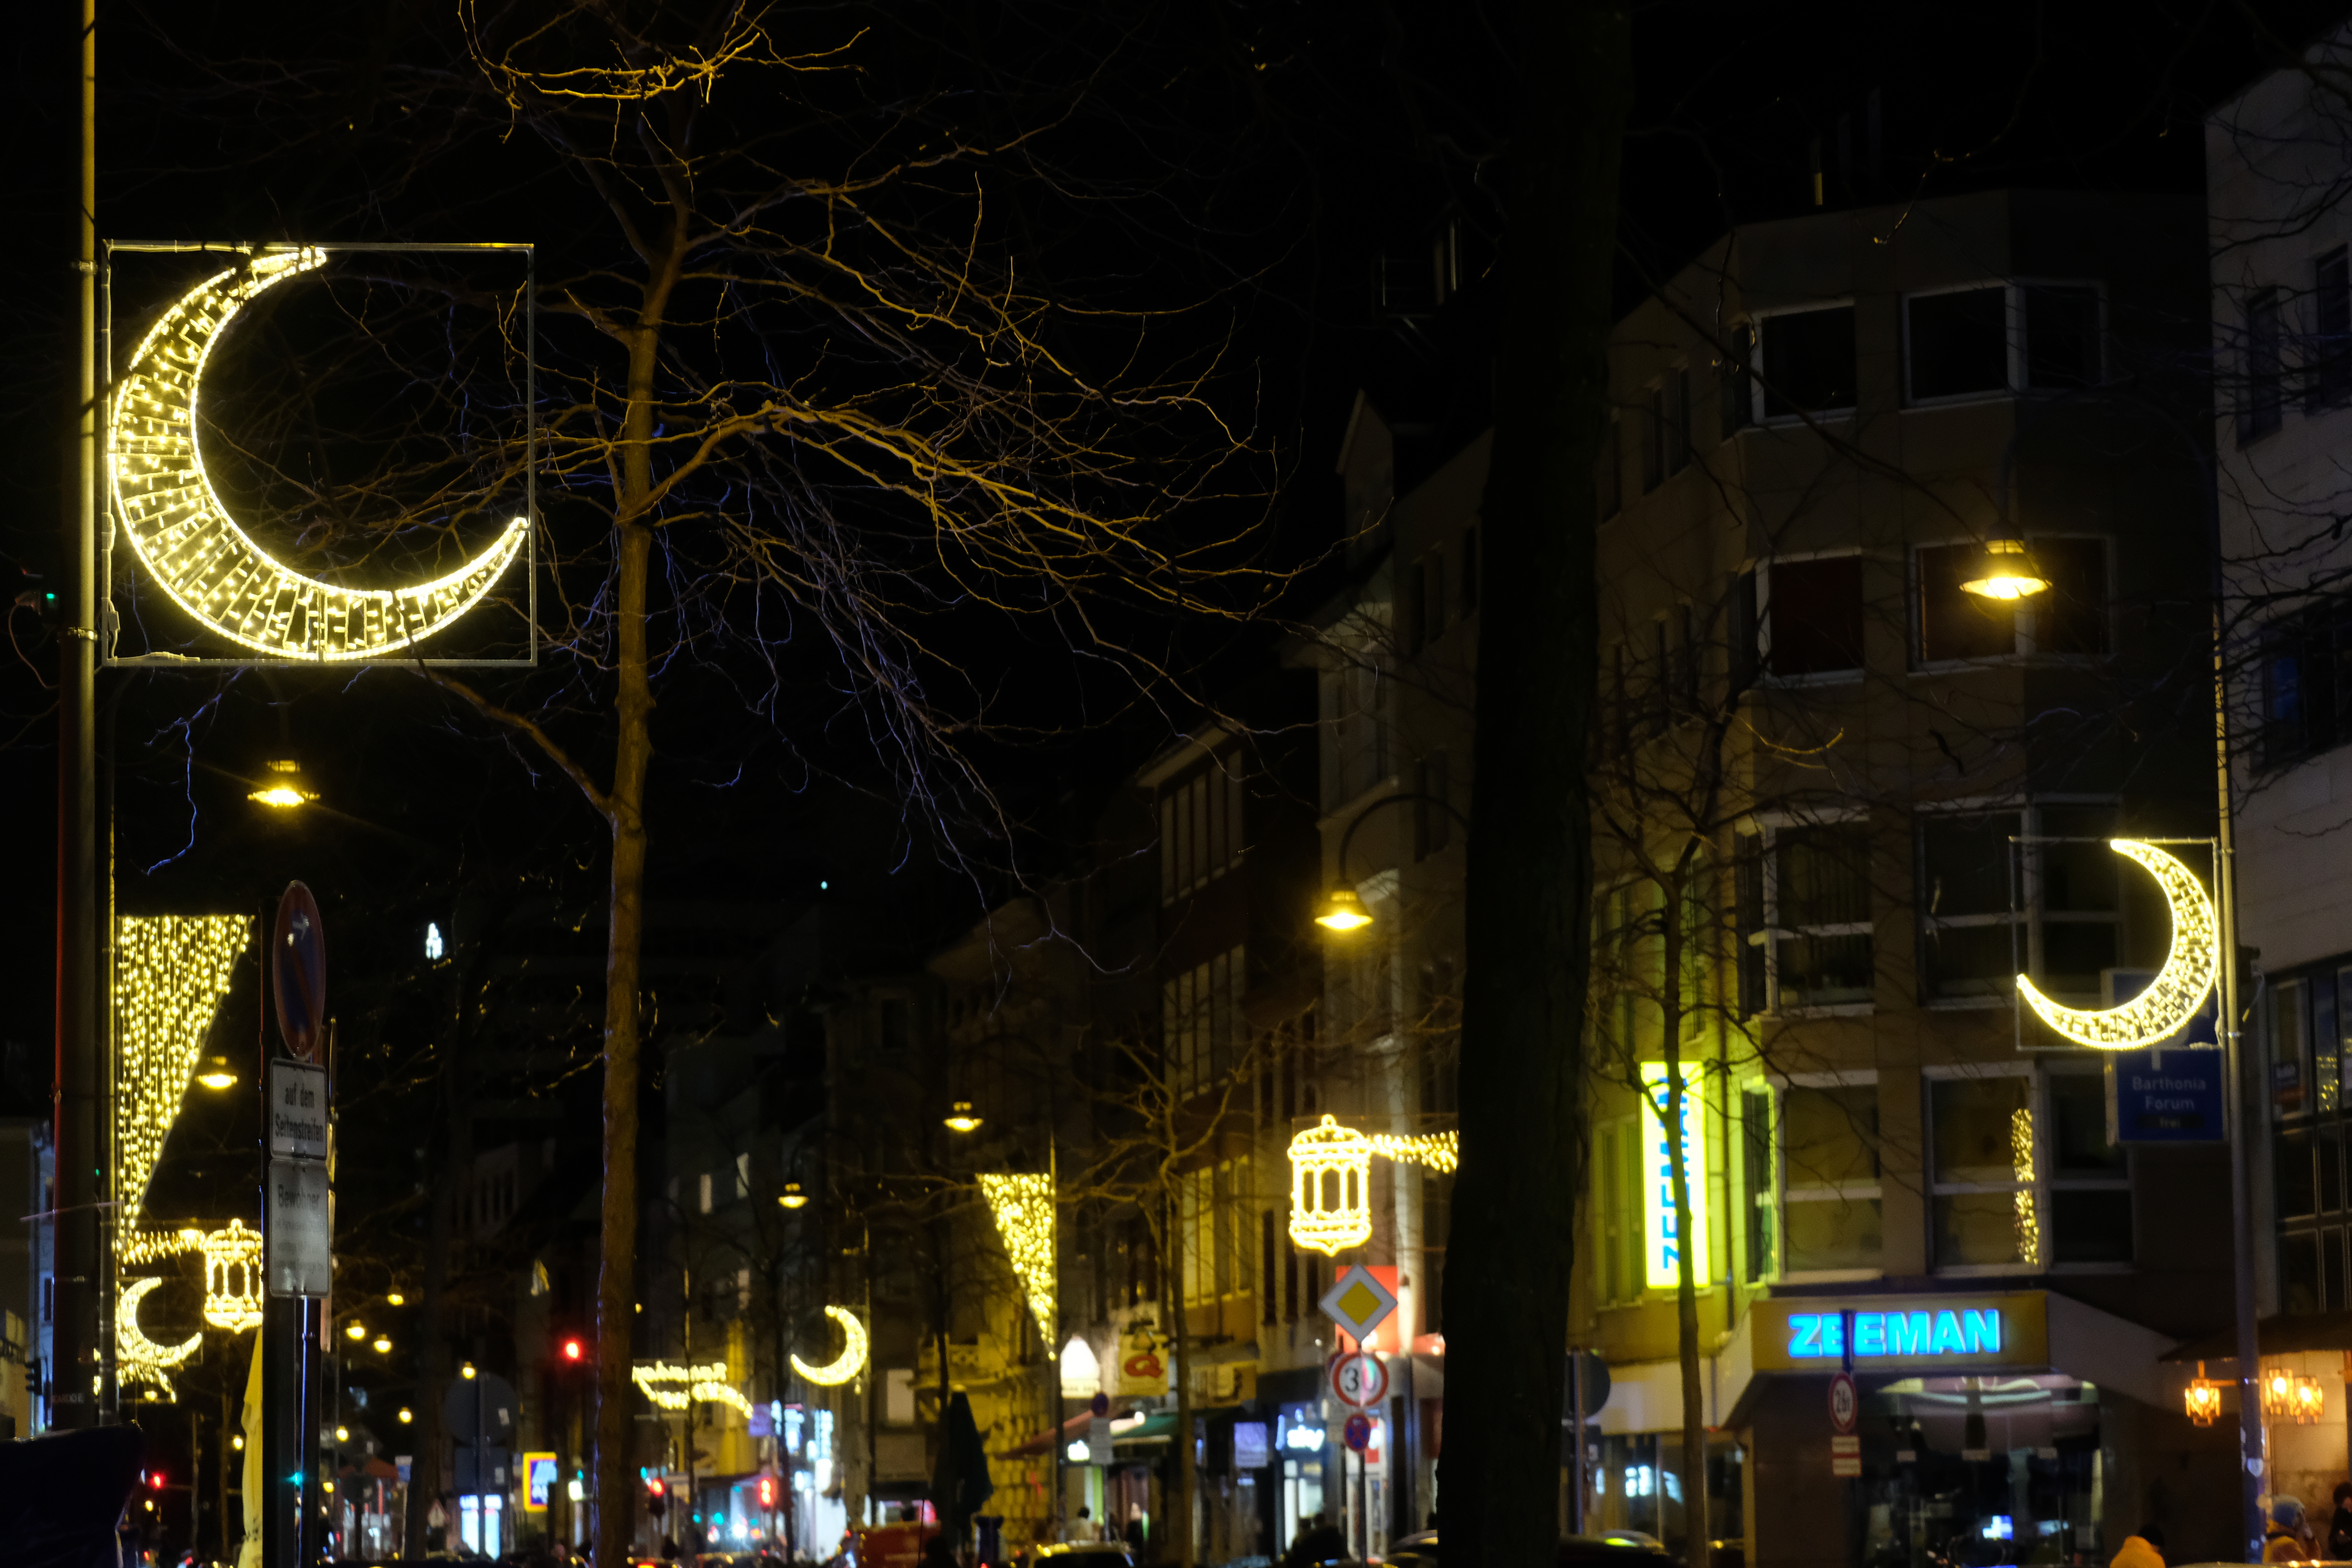 Ramadan-Beleuchtung in der Venloer Straße in Köln